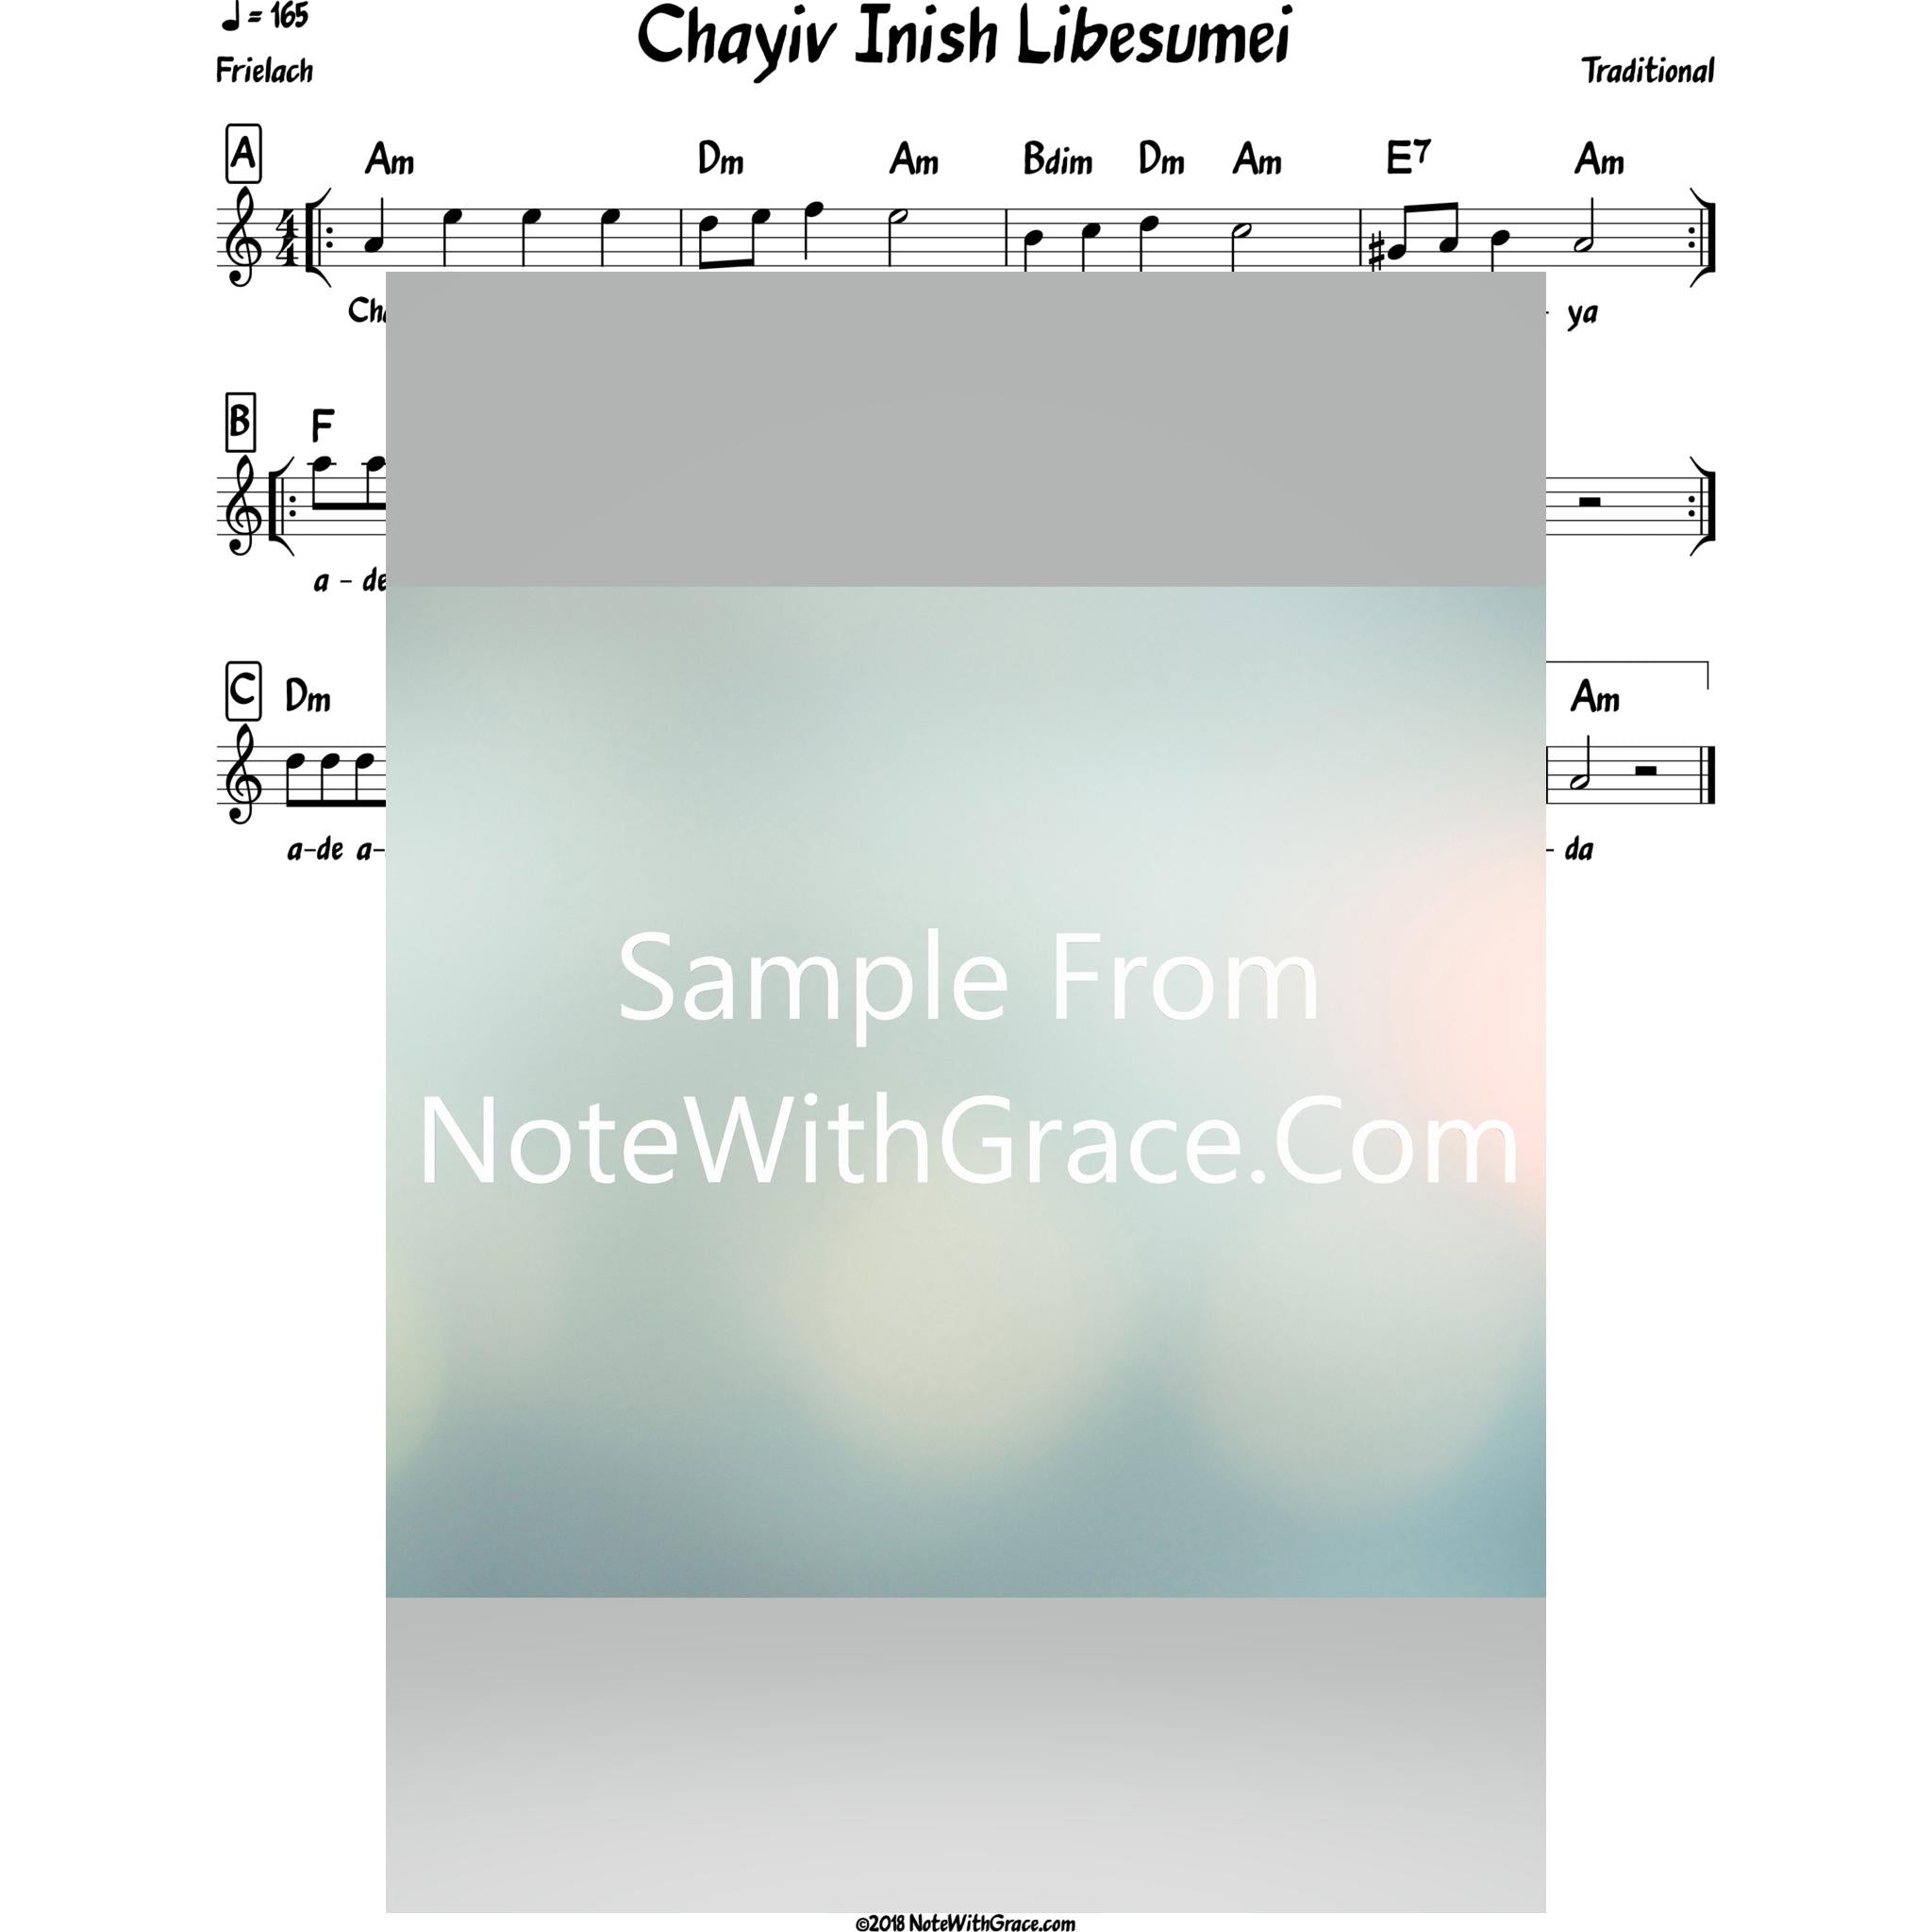 Chayiv Inish Libesumei Lead Sheet (Traditional) Purim-Sheet music-NoteWithGrace.com